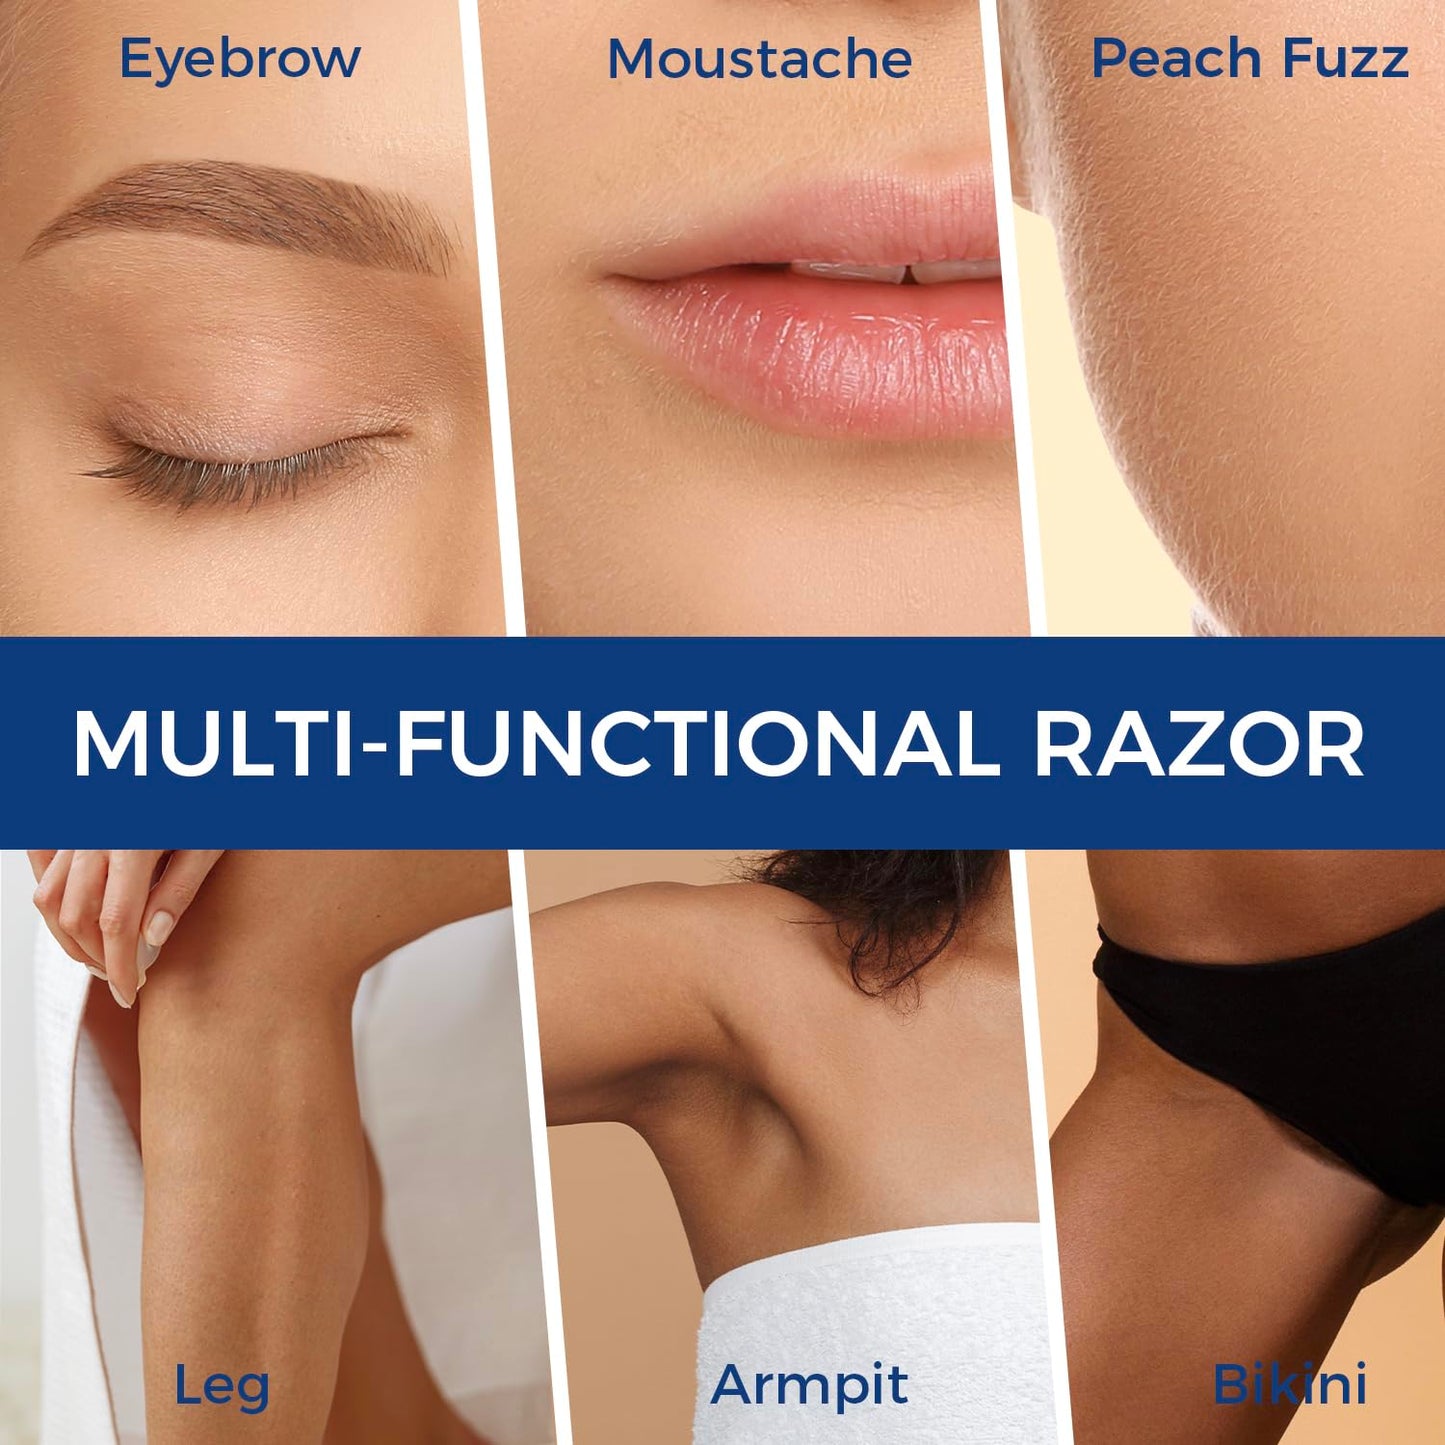 ZOMCHI Eyebrow Razor, Face Razors for Women&Men, Eyebrow Trimmer with Protective Silicone Cap, Dermaplane Razor-Easy&Safe Hair Removal(Blue,11 Blades)